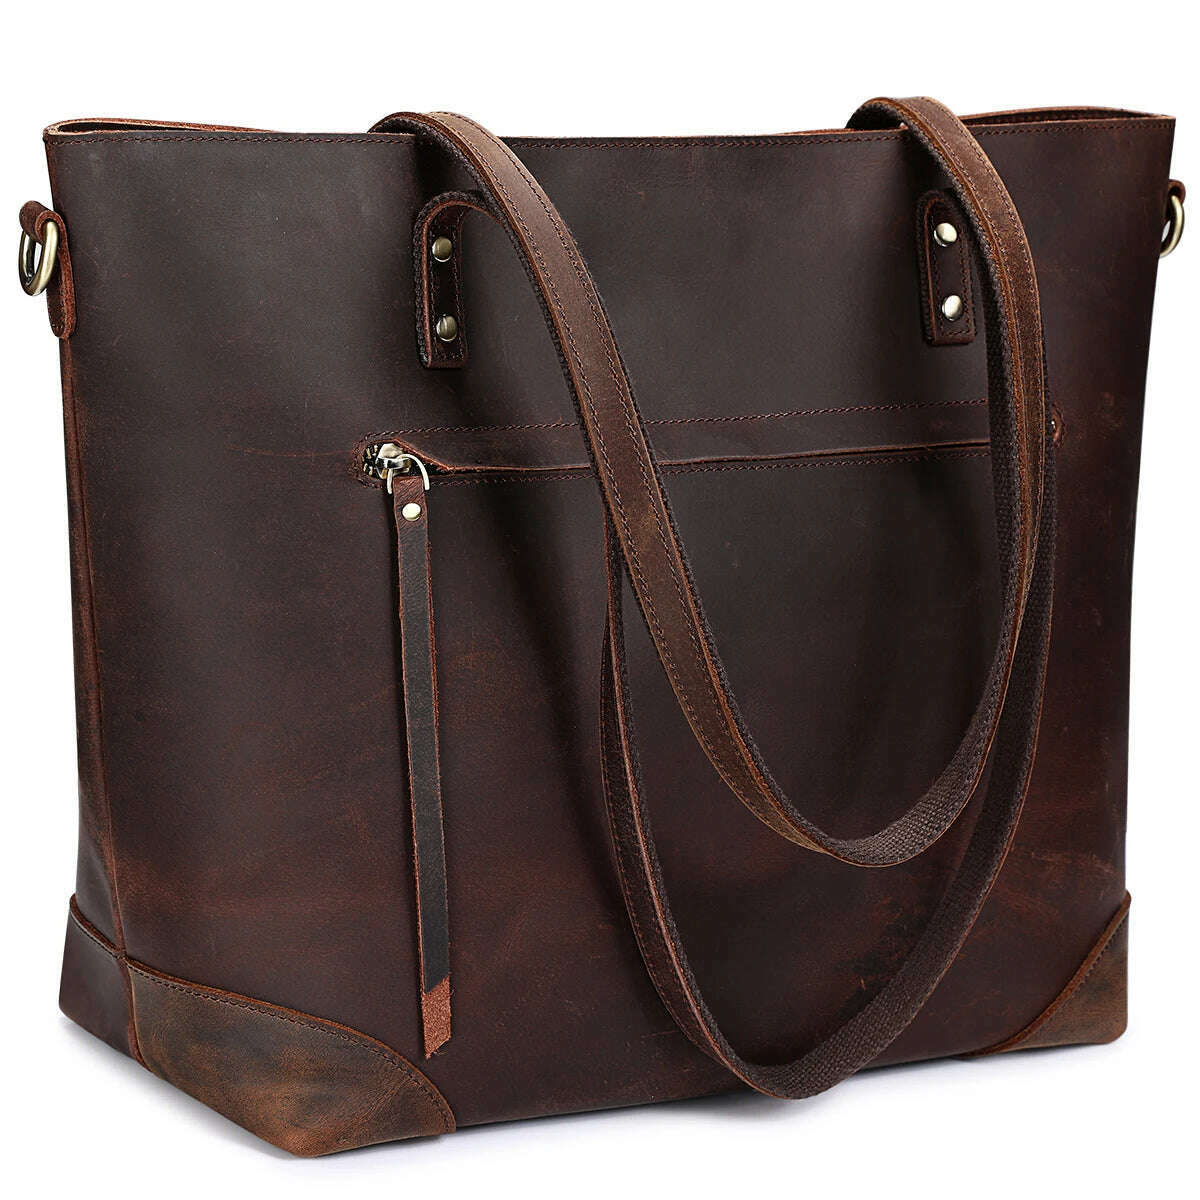 KIMLUD, S-ZONE Vintage Genuine Leather Shoulder Bag Work Totes for Women Purse Handbag with Back Zipper Pocket Large, KIMLUD Women's Clothes